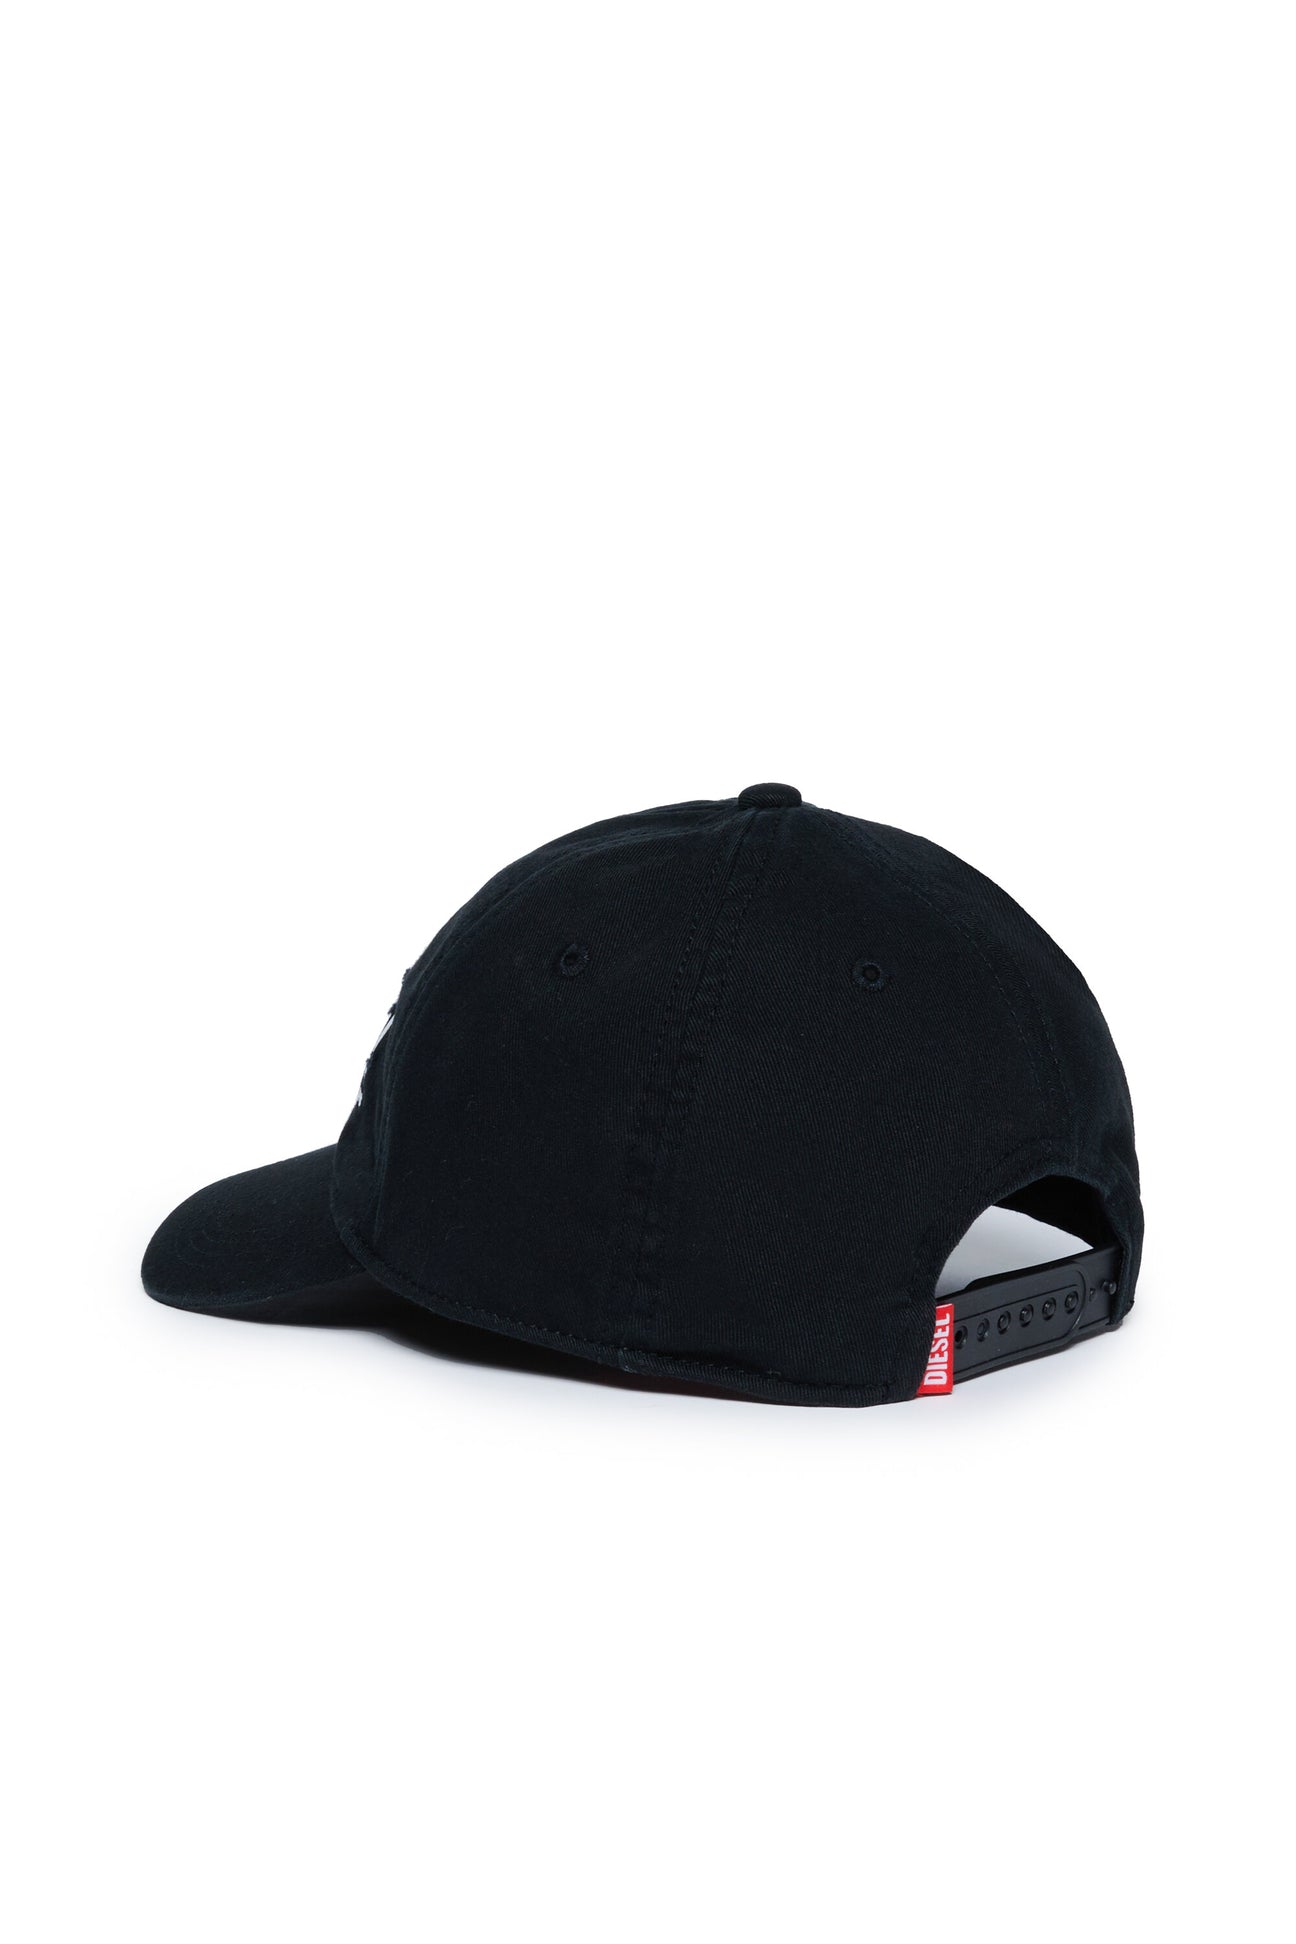 Baseball cap with breaks and logo Baseball cap with breaks and logo